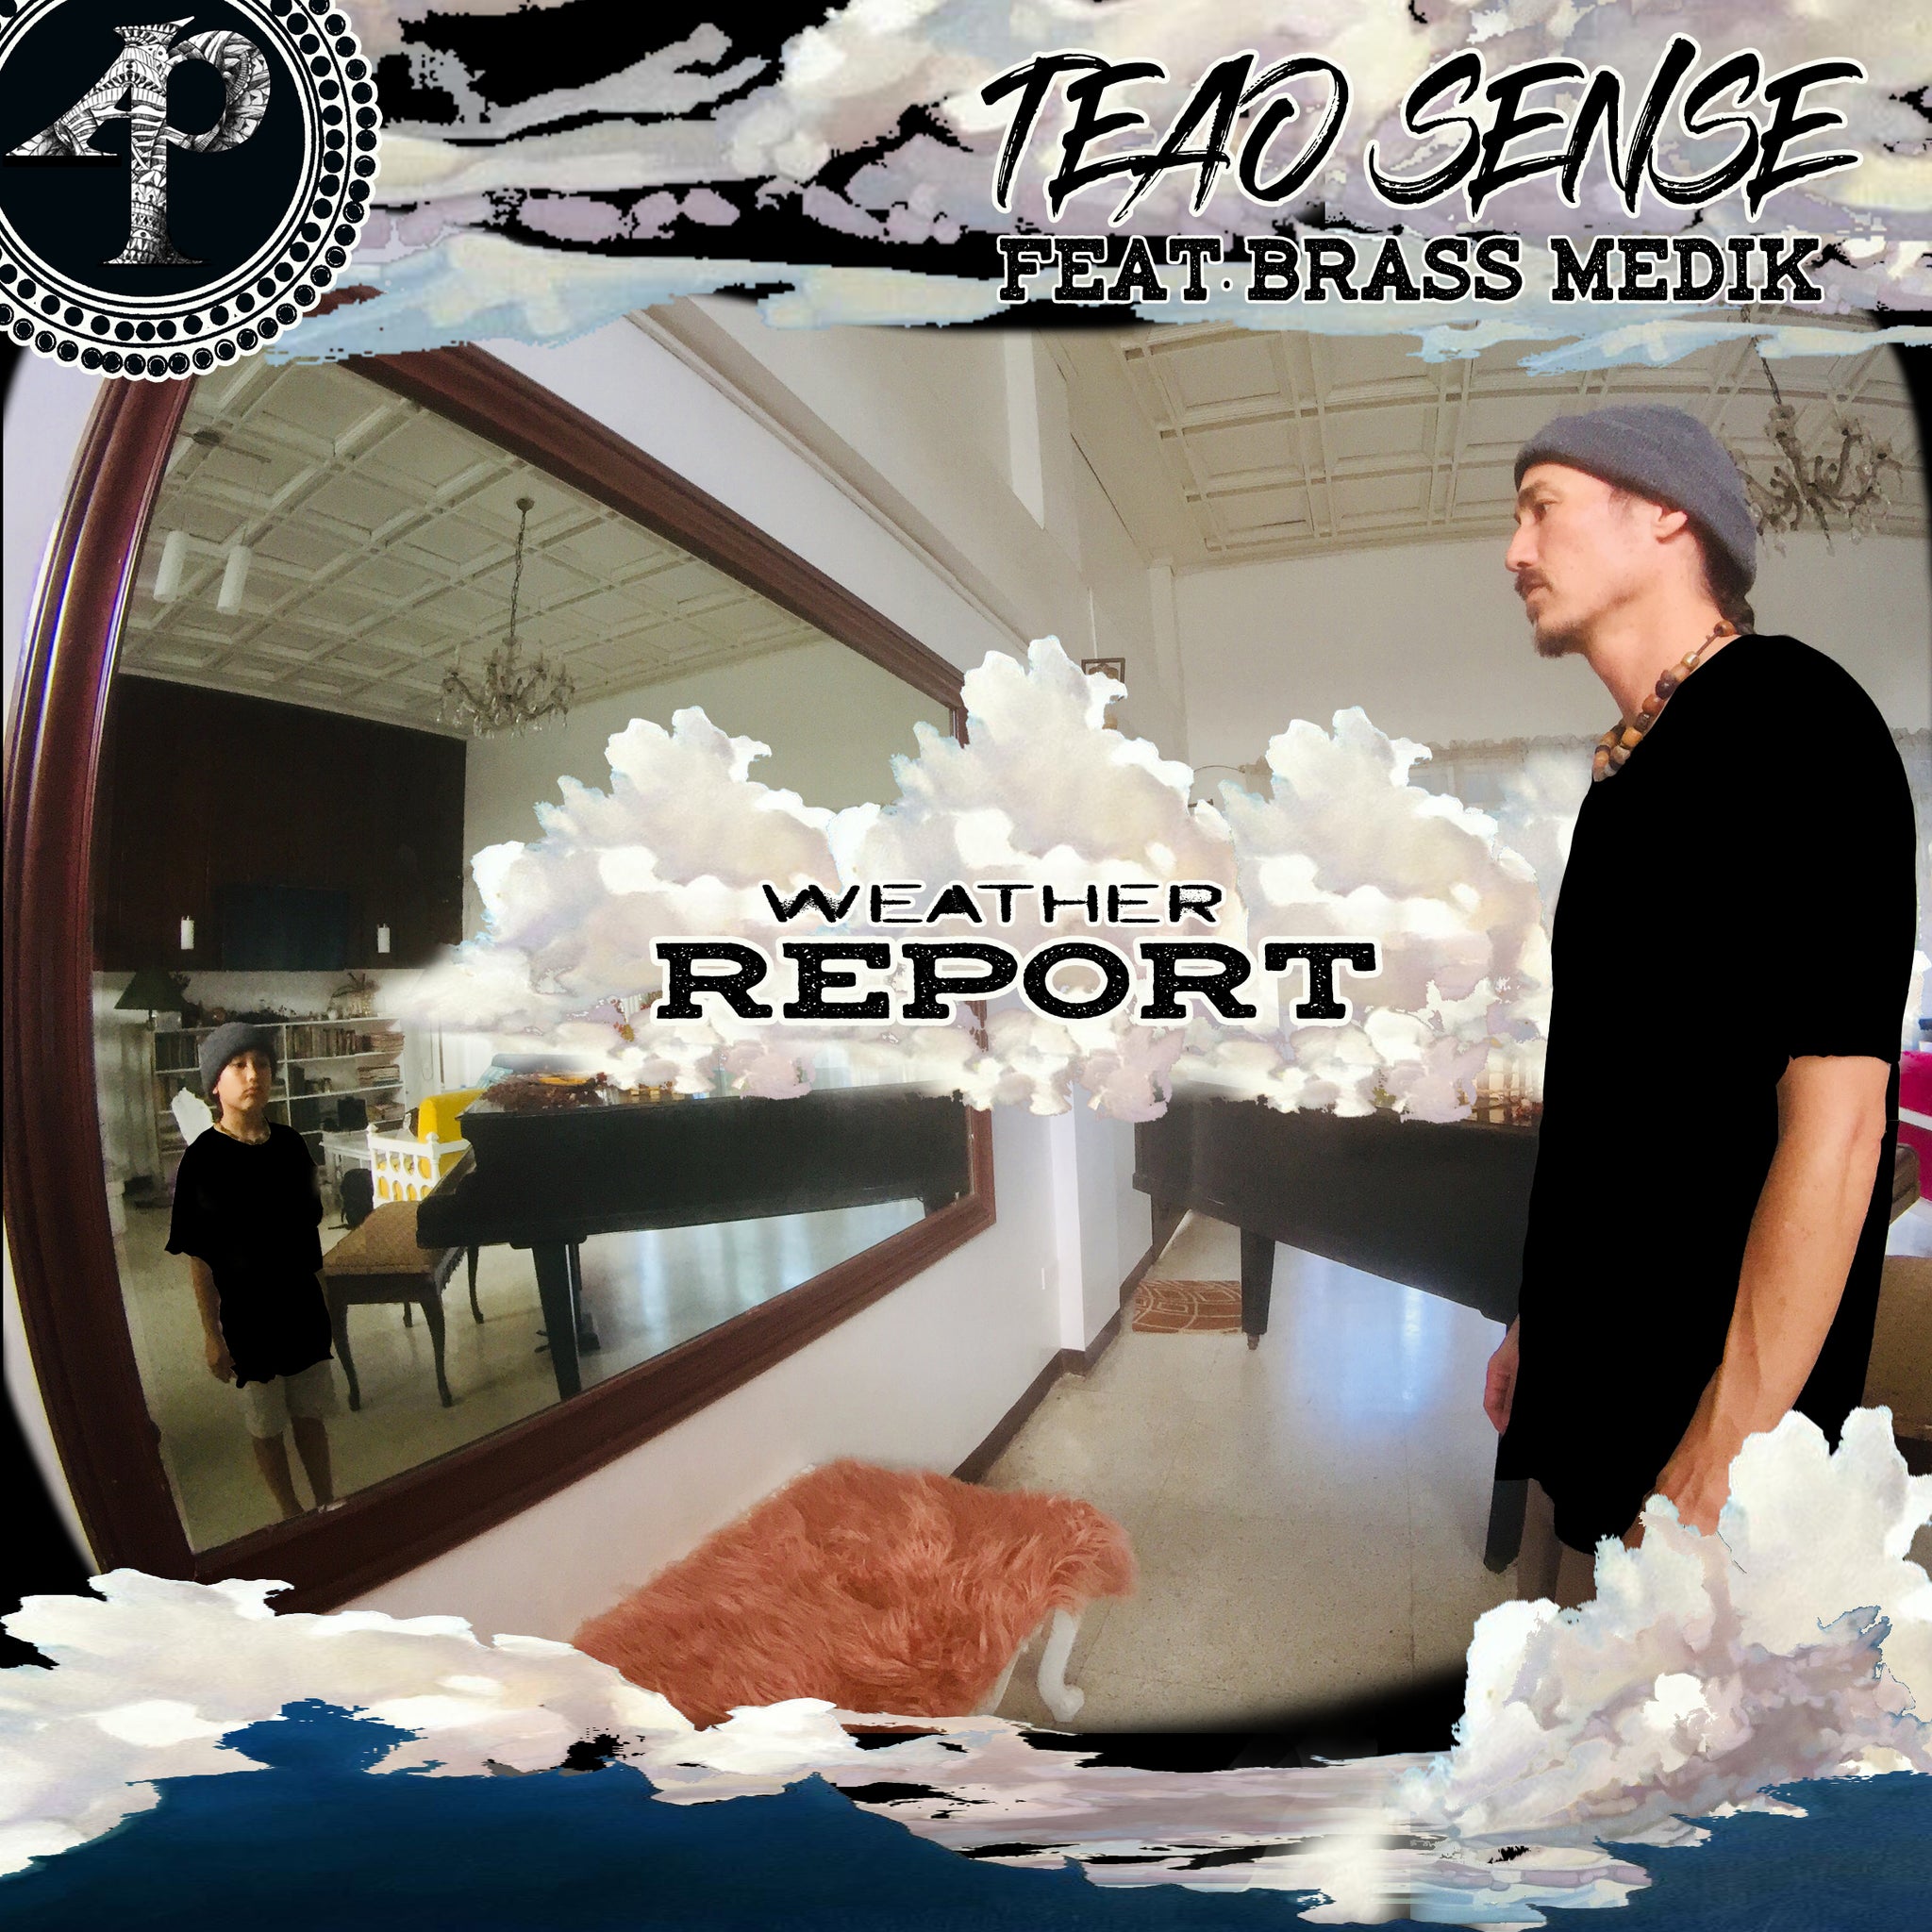 Teao Sense feat. Brass Medik - "Weather Report" (single download)